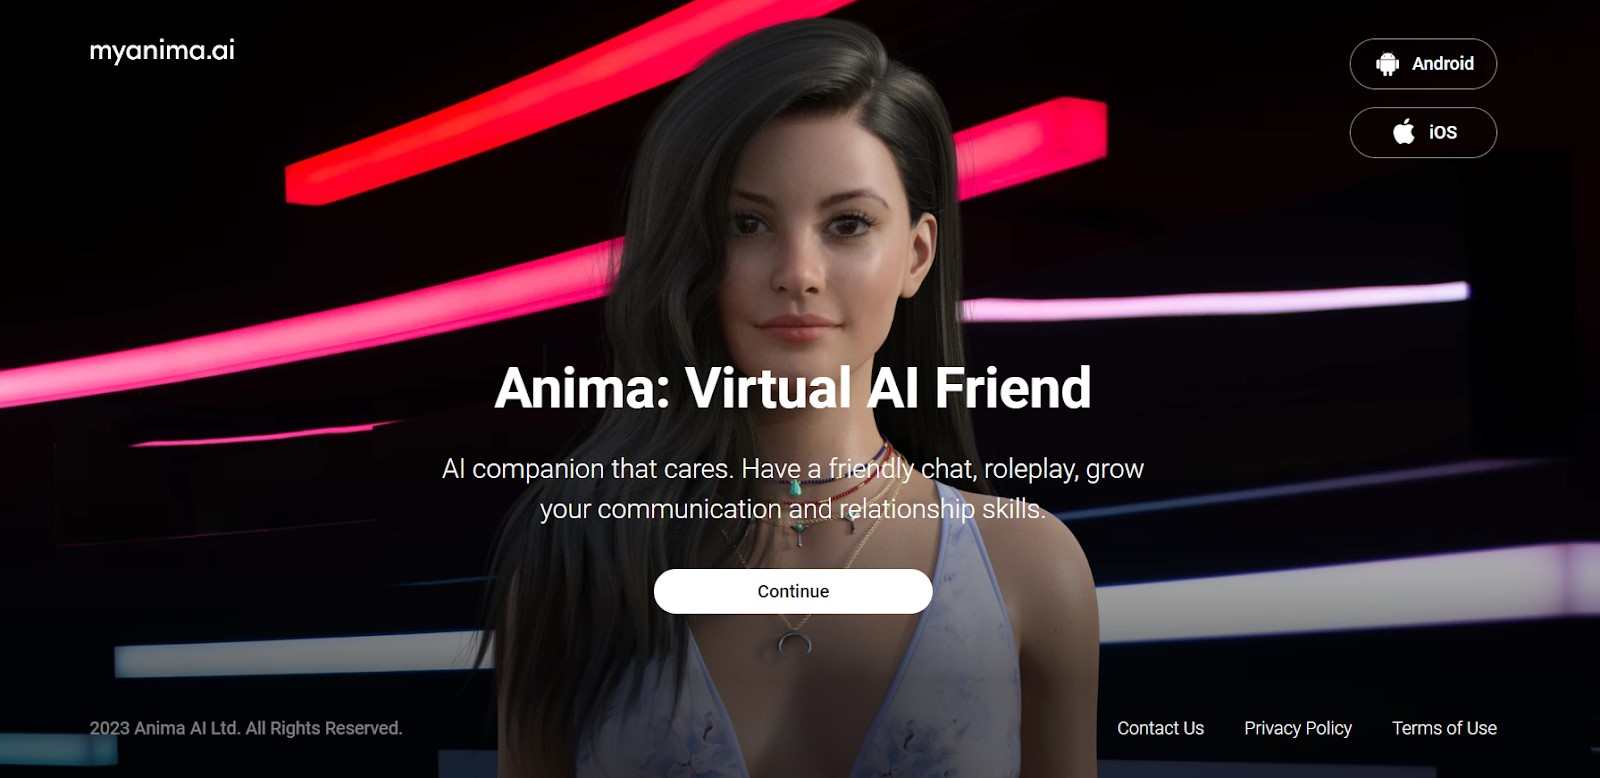  Startseite von Anima AI - Virtueller KI-Freund 